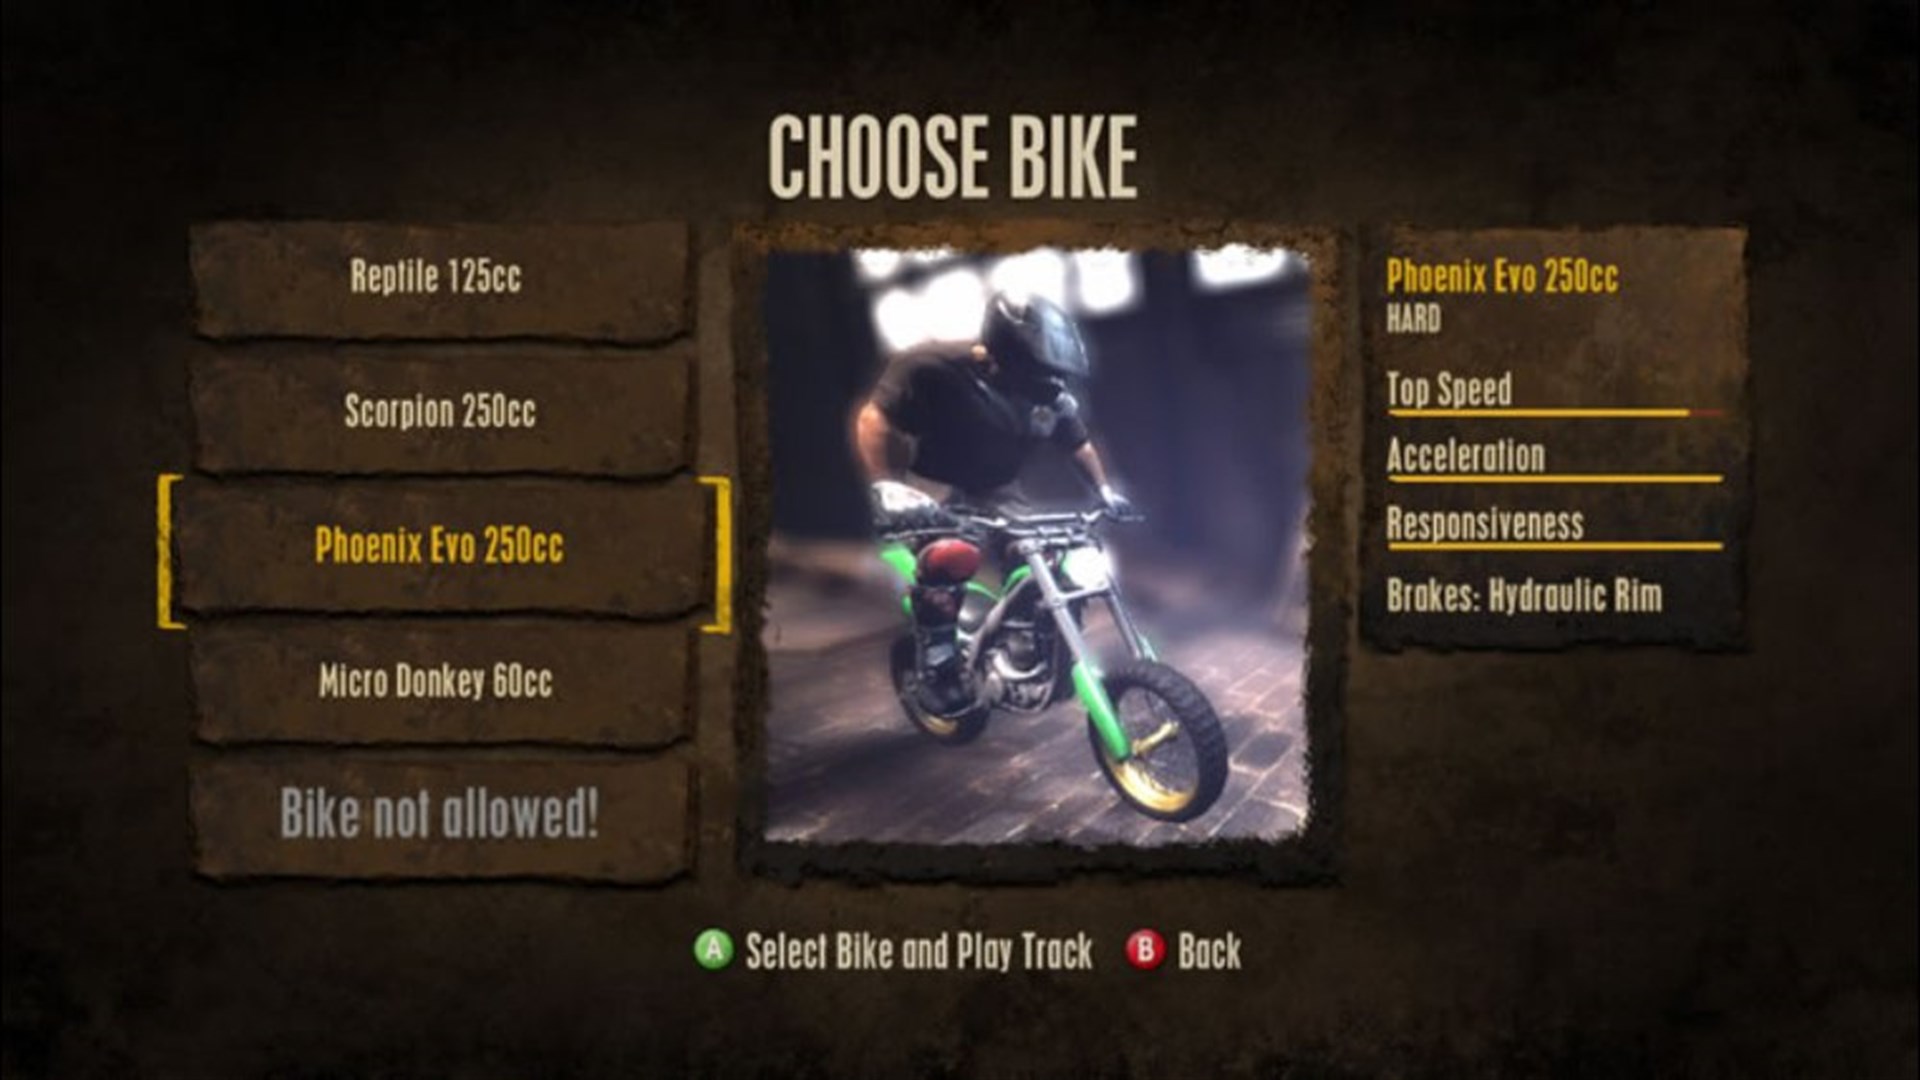 Trials HD Xbox 360. Trials HD. Limbo/Trials HD/Splosion man. No Bikes allowed. Trials report